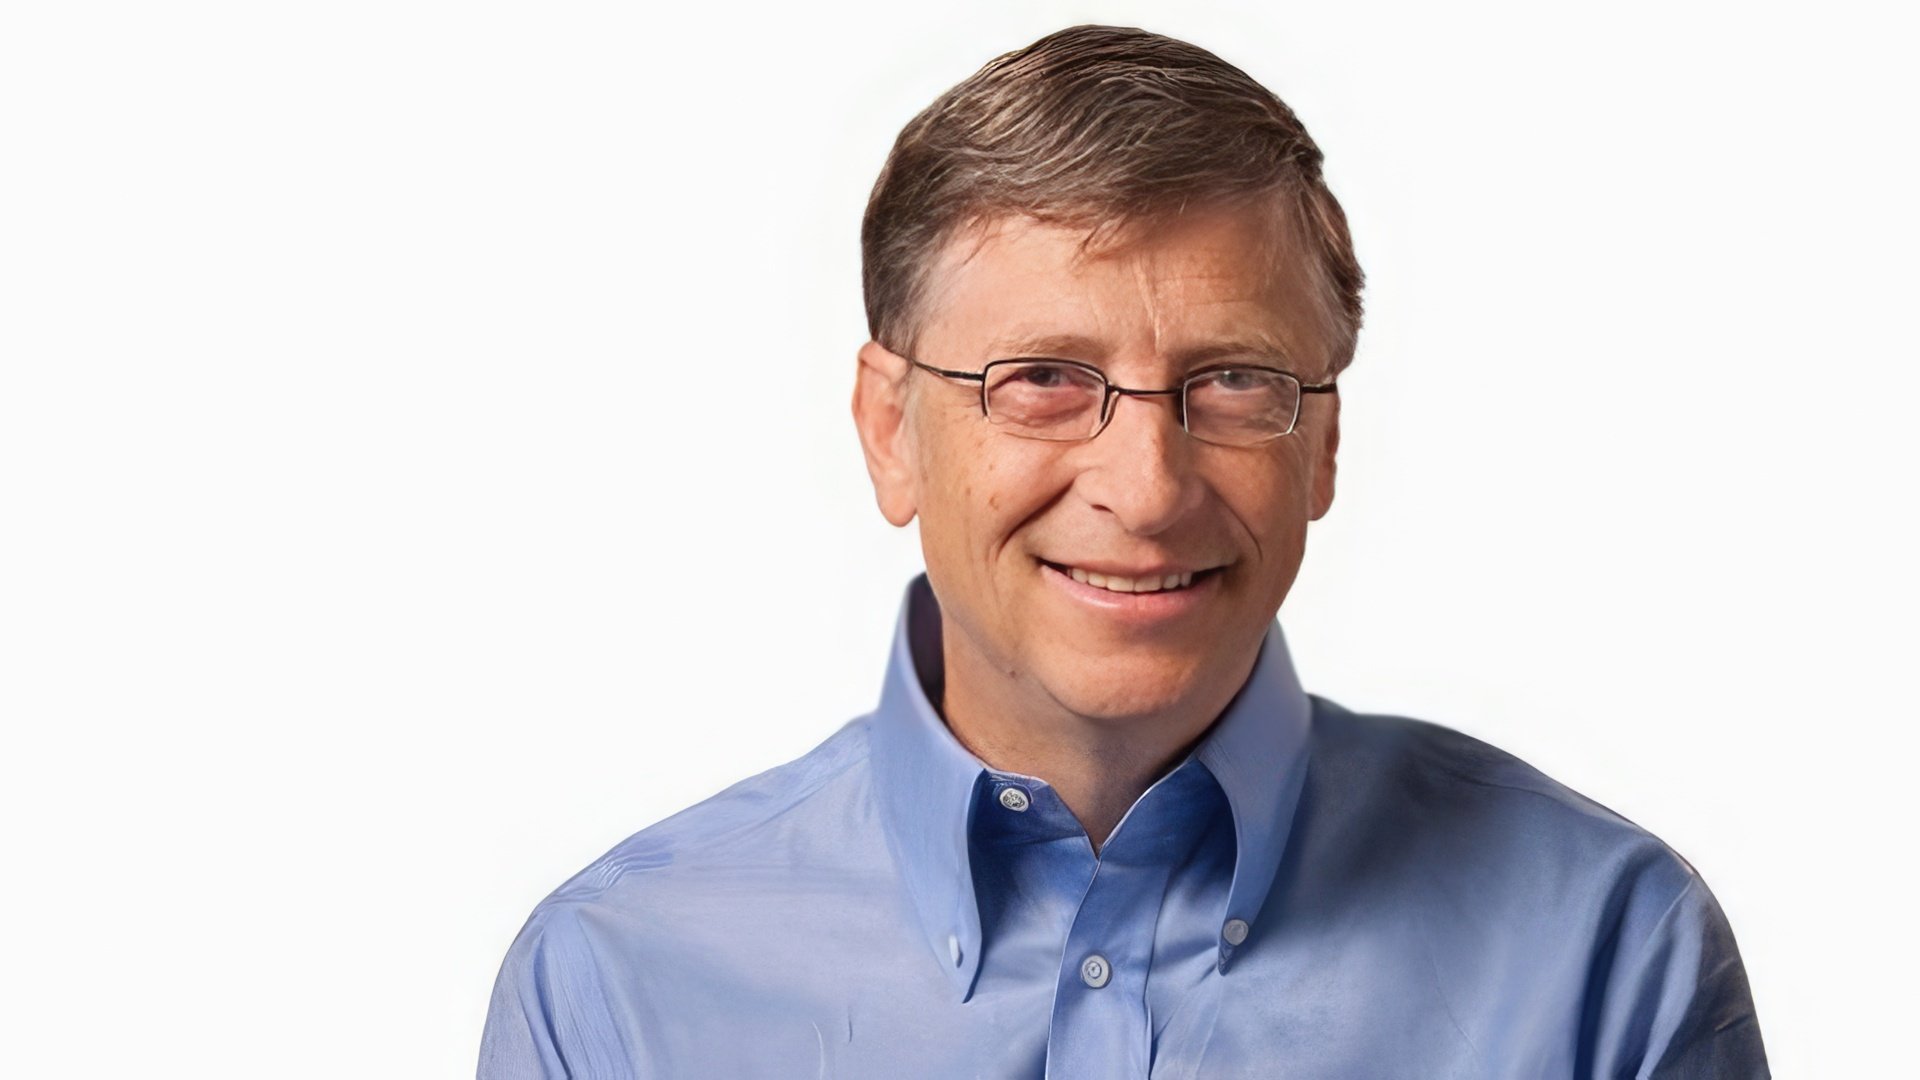 Pictured: Bill Gates